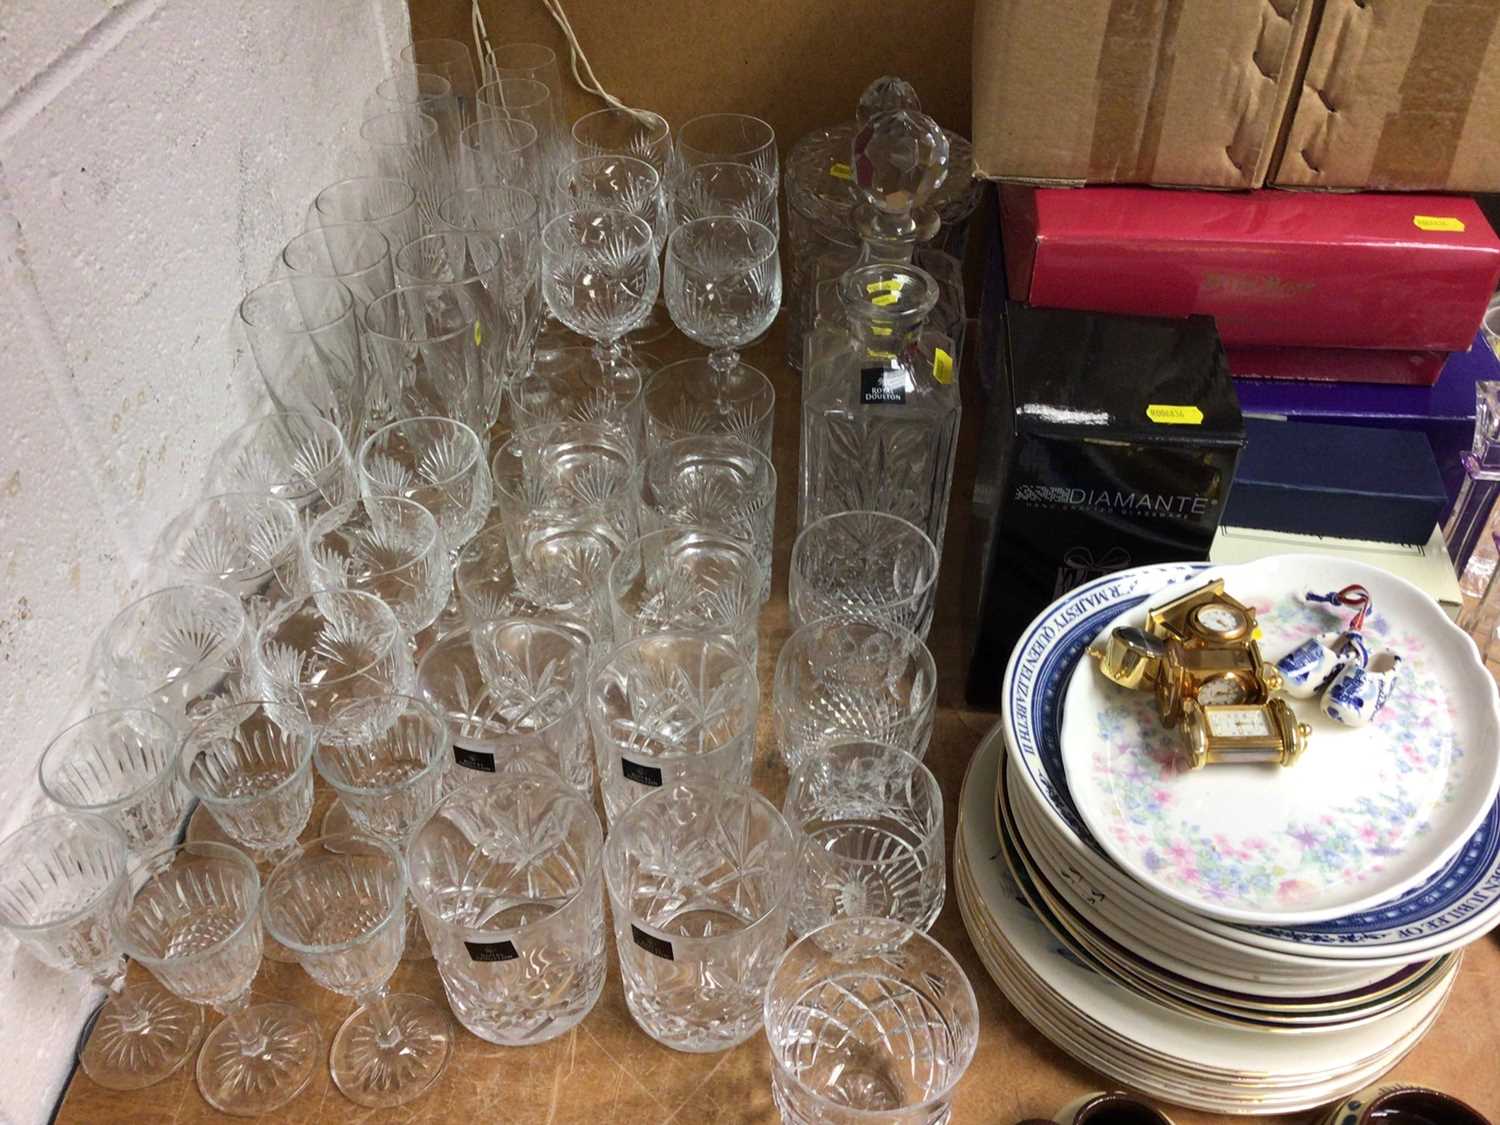 Group cut glassware including Royal Doulton, Edinburgh Crystal, various tea ware, decorative plates